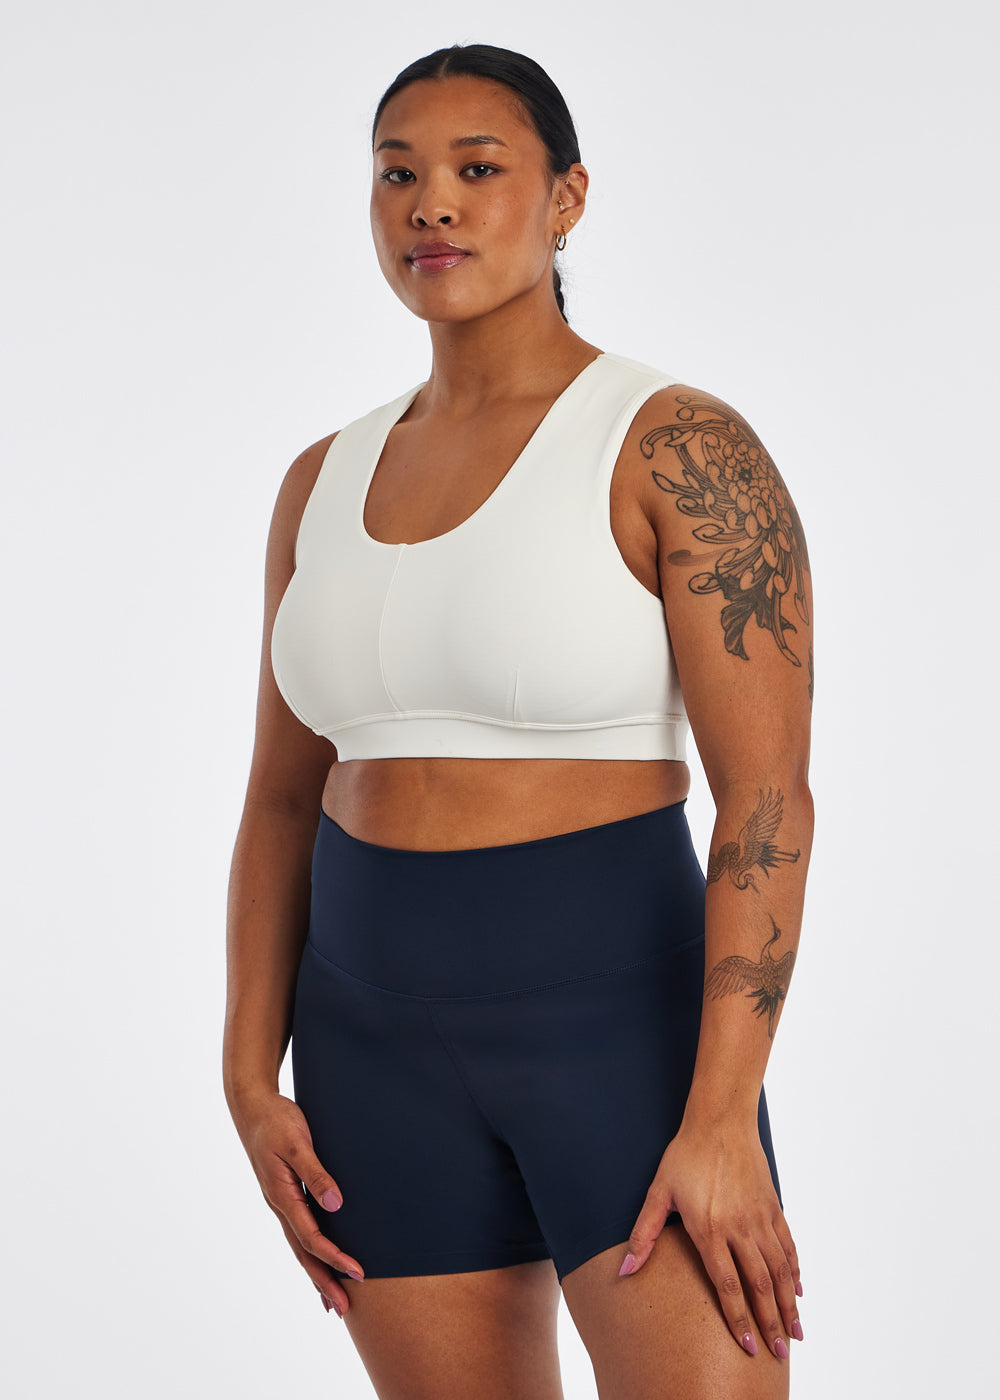 Athletic Works Women's Plus Size Zipper Front Sports Bra, Black